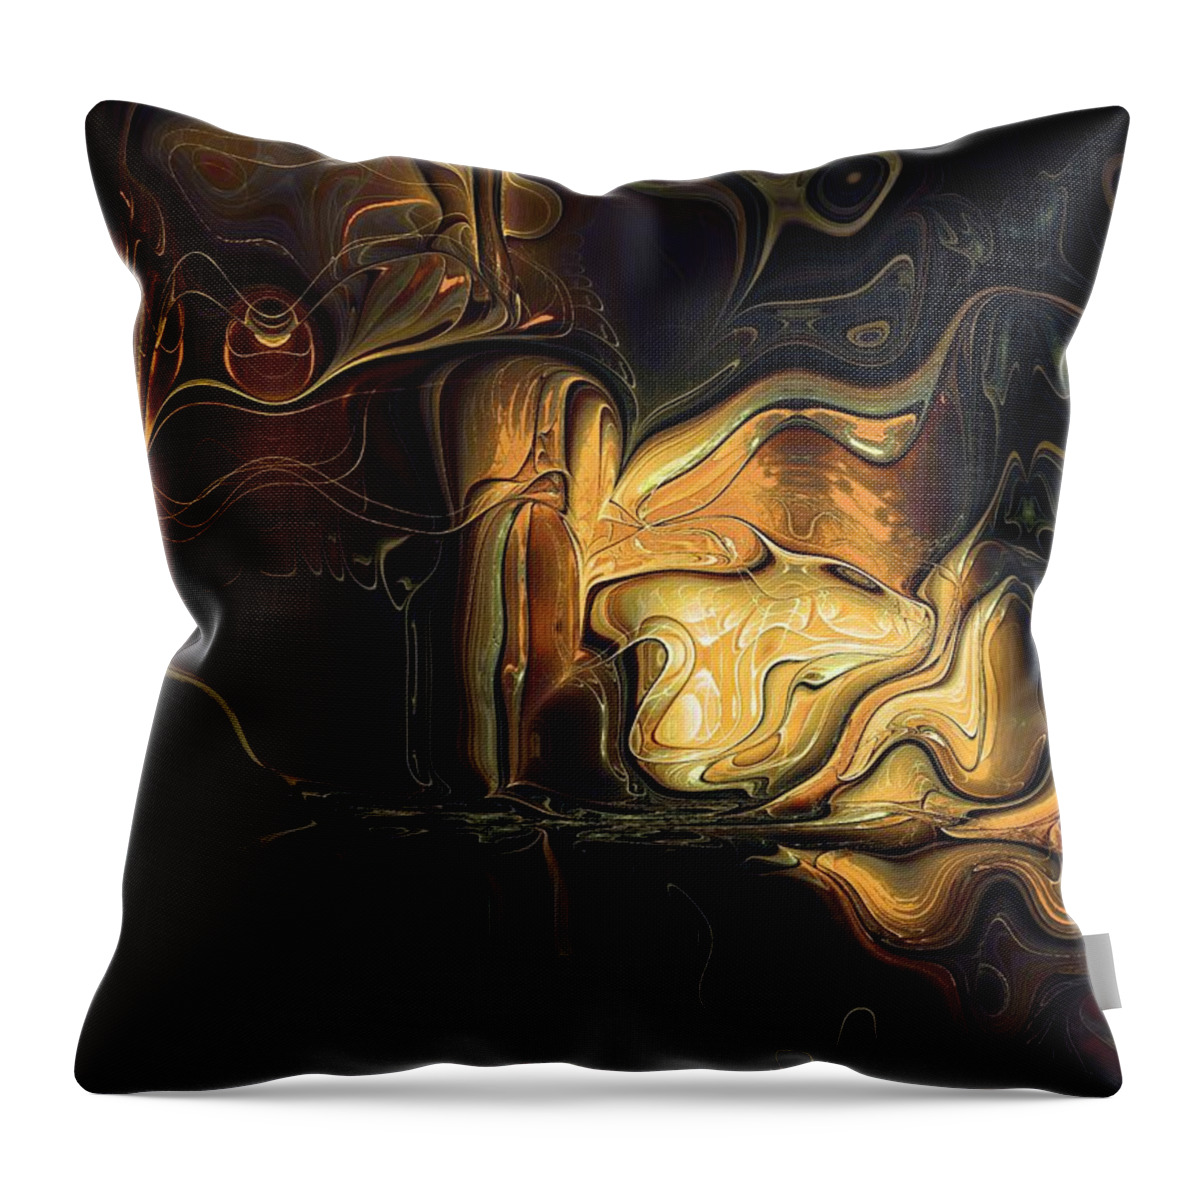 Digital Art Throw Pillow featuring the digital art Golden Glory by Amanda Moore